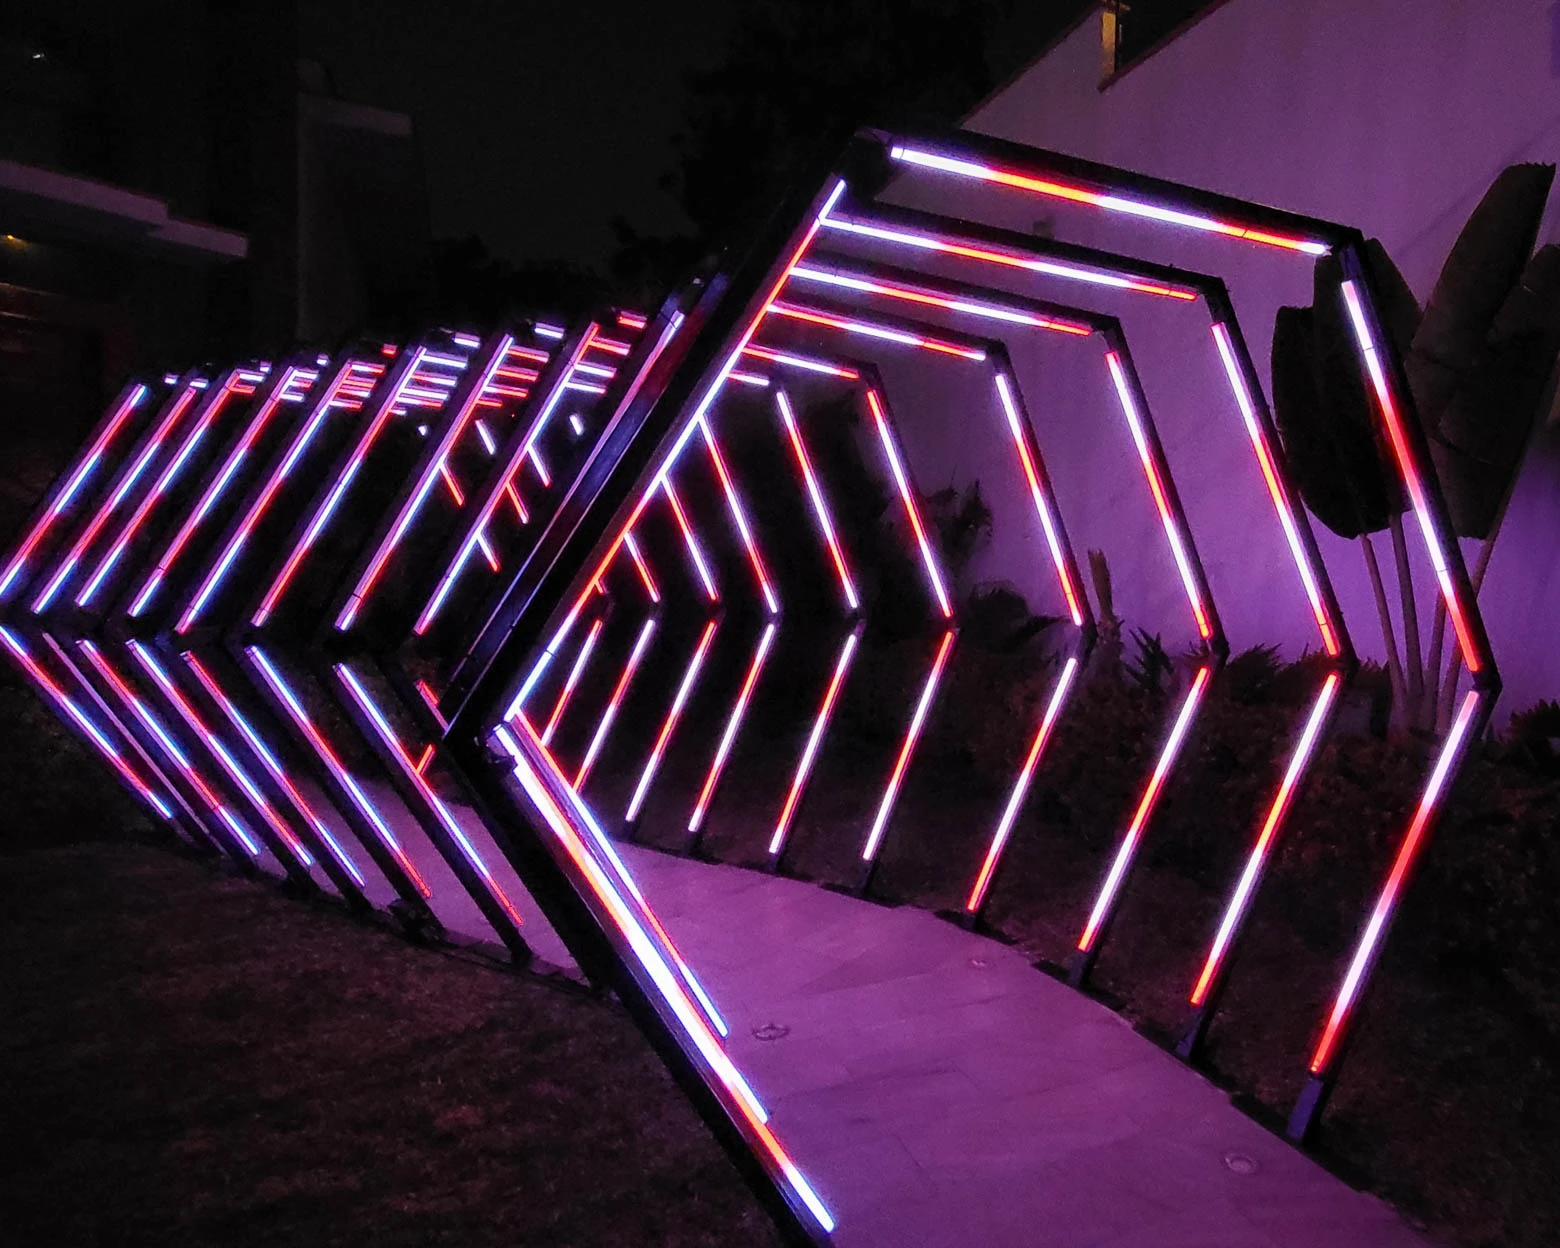 Túnel LED hexagonal RGB: Destacando el acceso a una casa de eventos con luces cambiantes de múltiples colores. - Túnel hexagonal led - scratch perú.